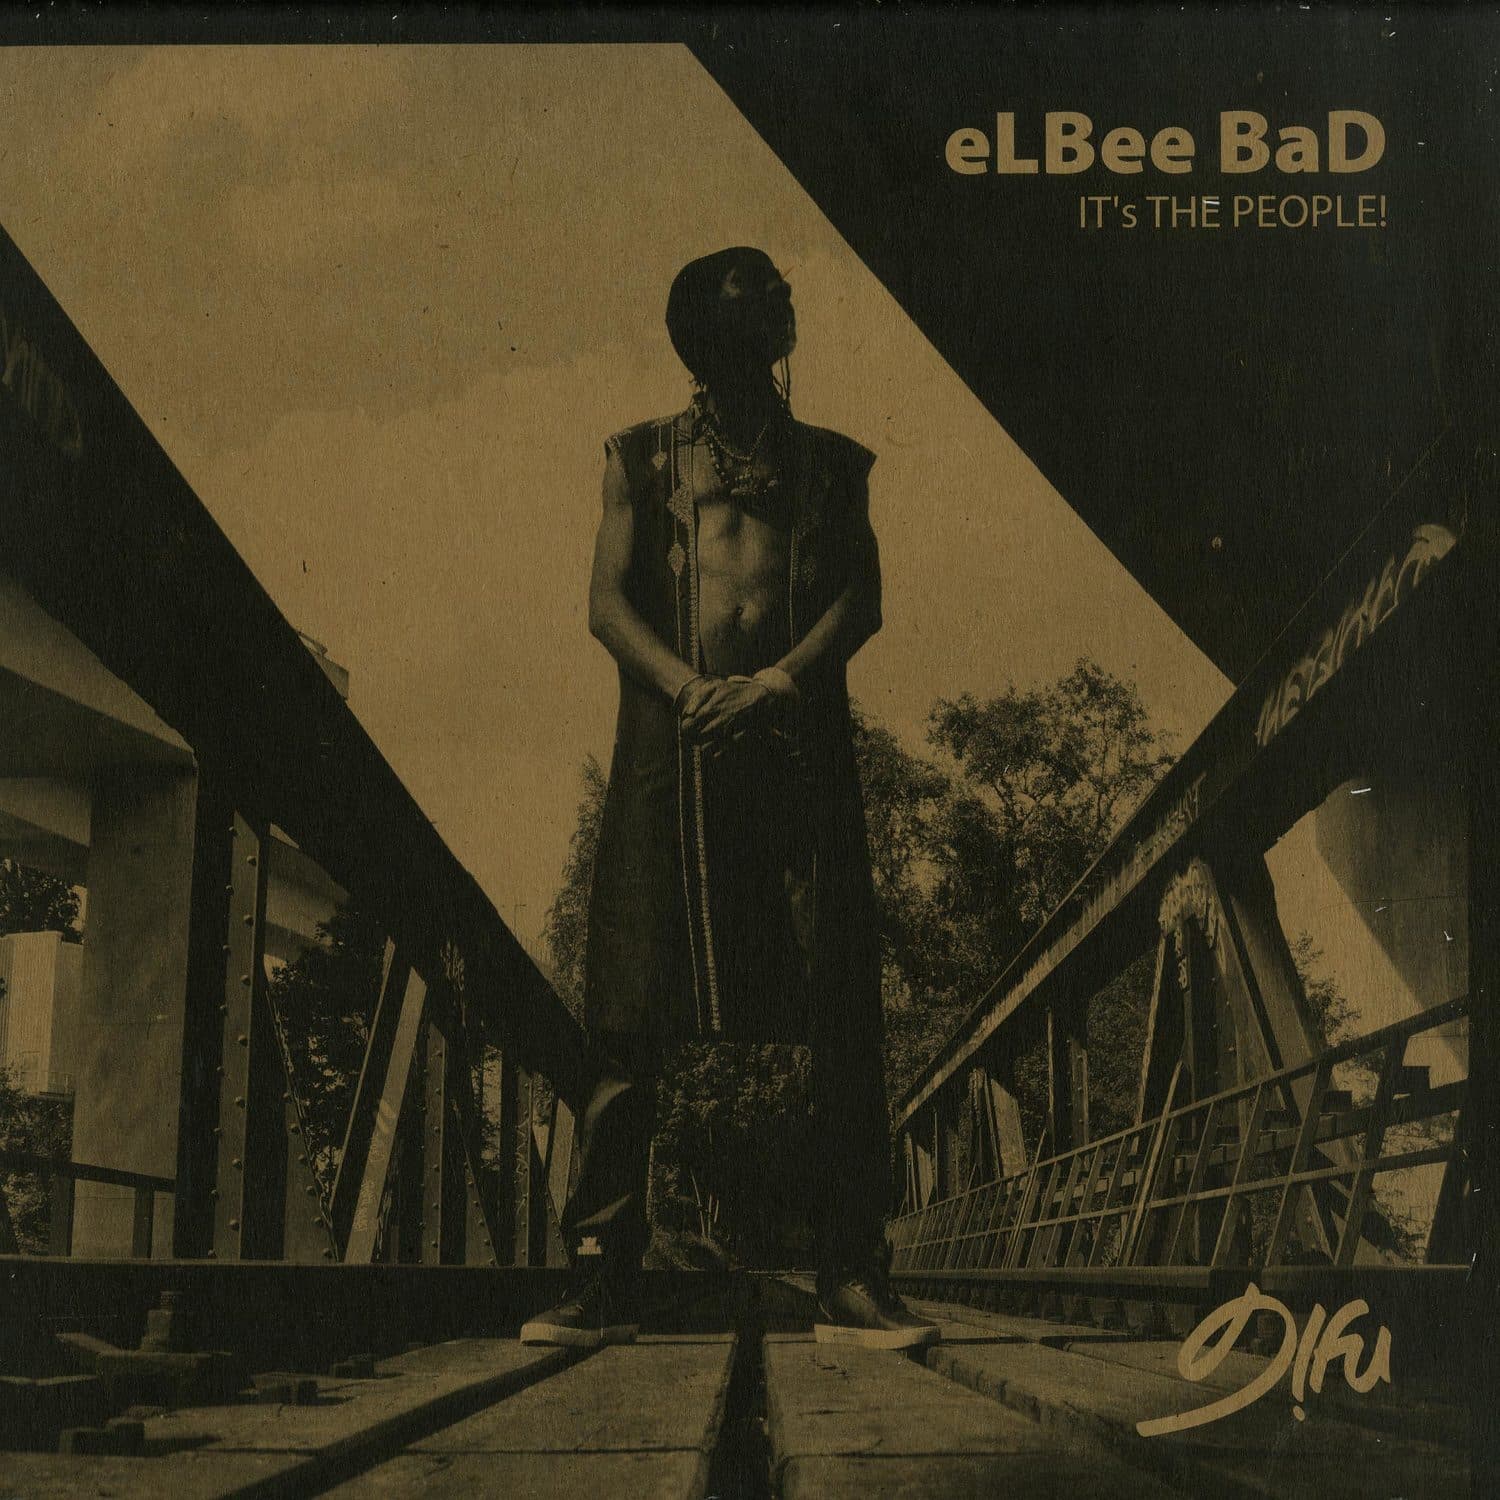 Elbee Bad - ITS THE PEOPLE 